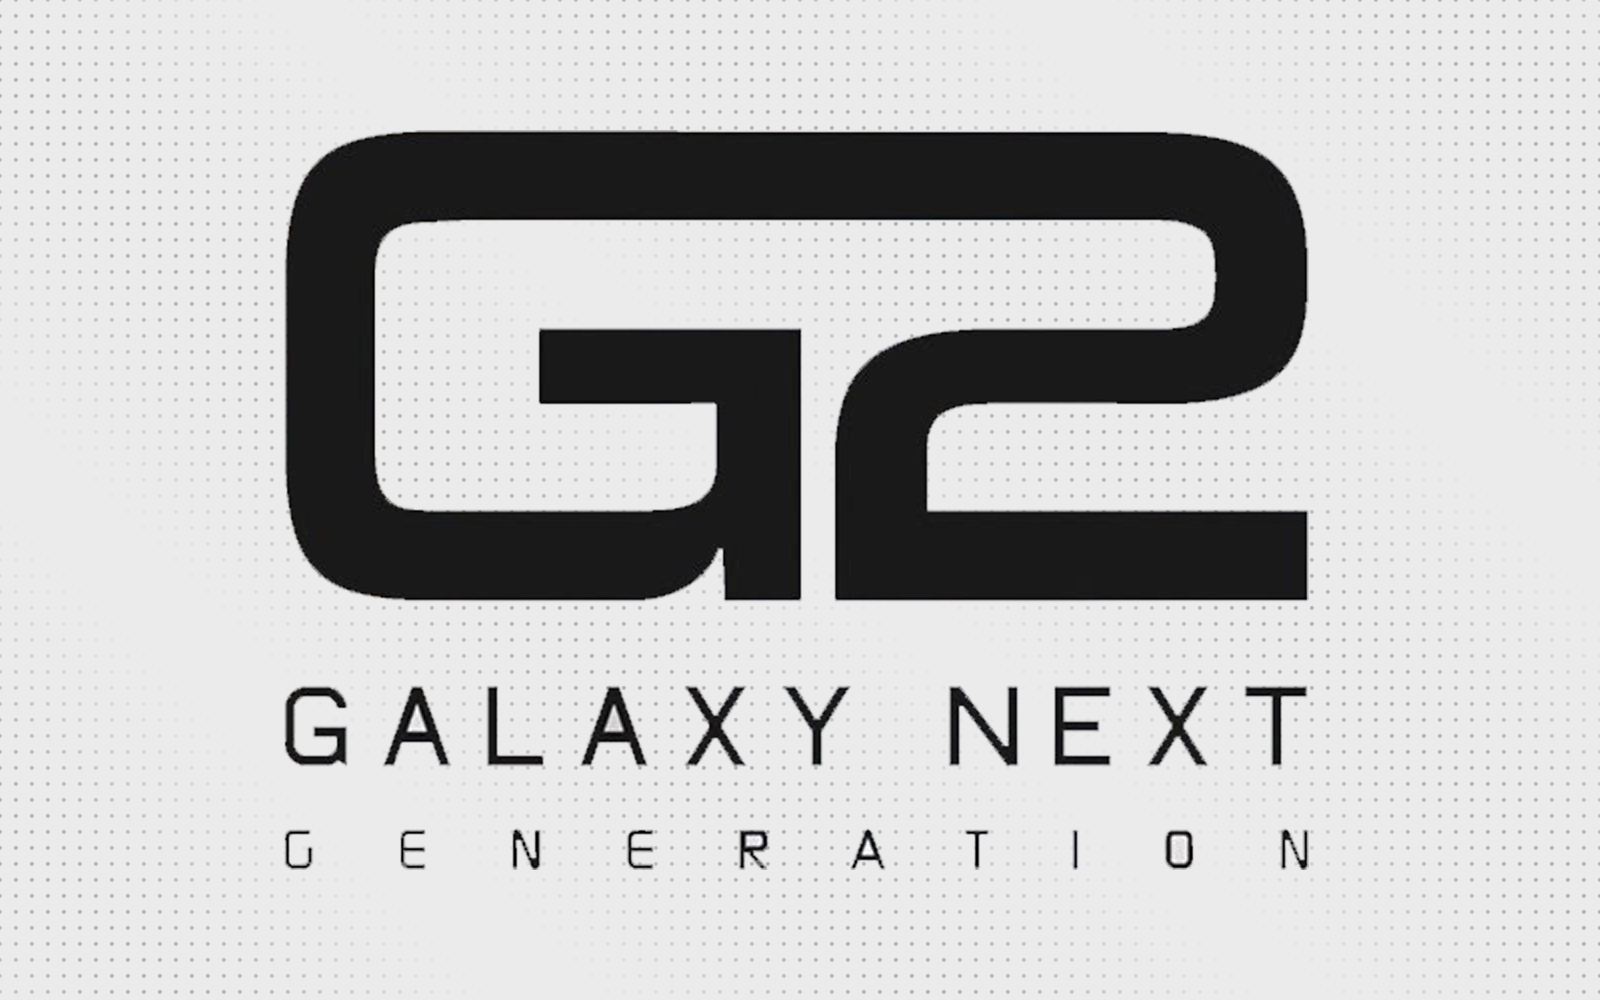 Galaxy Next Generation